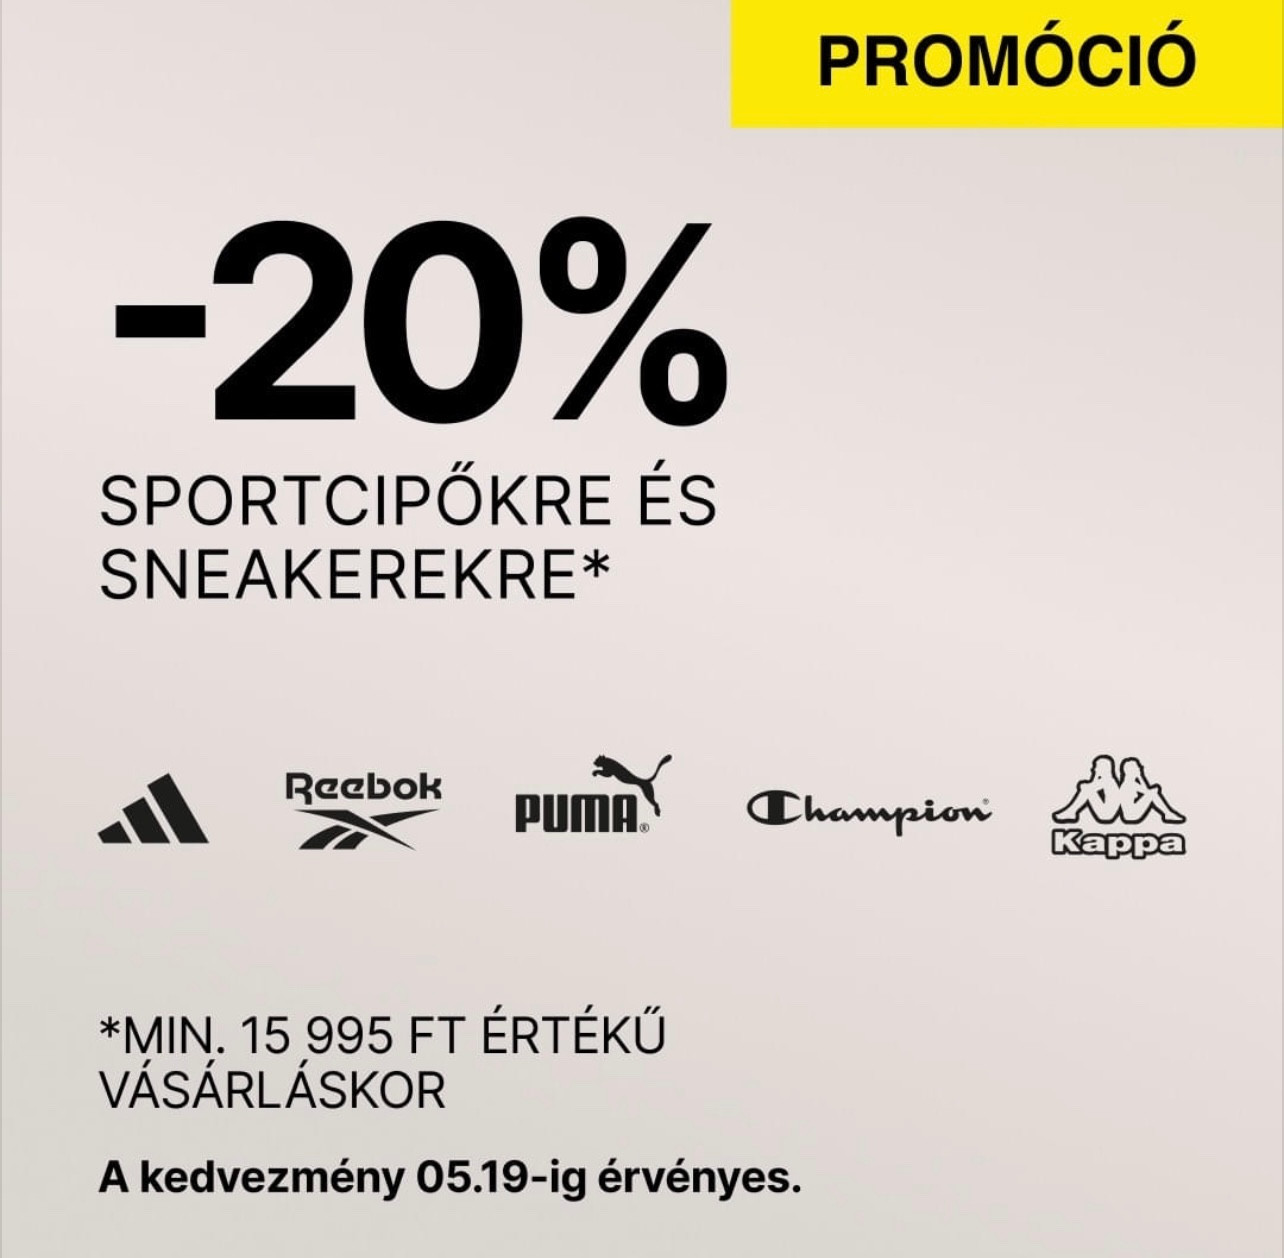 -20% sportcipőkre és sneakerekre